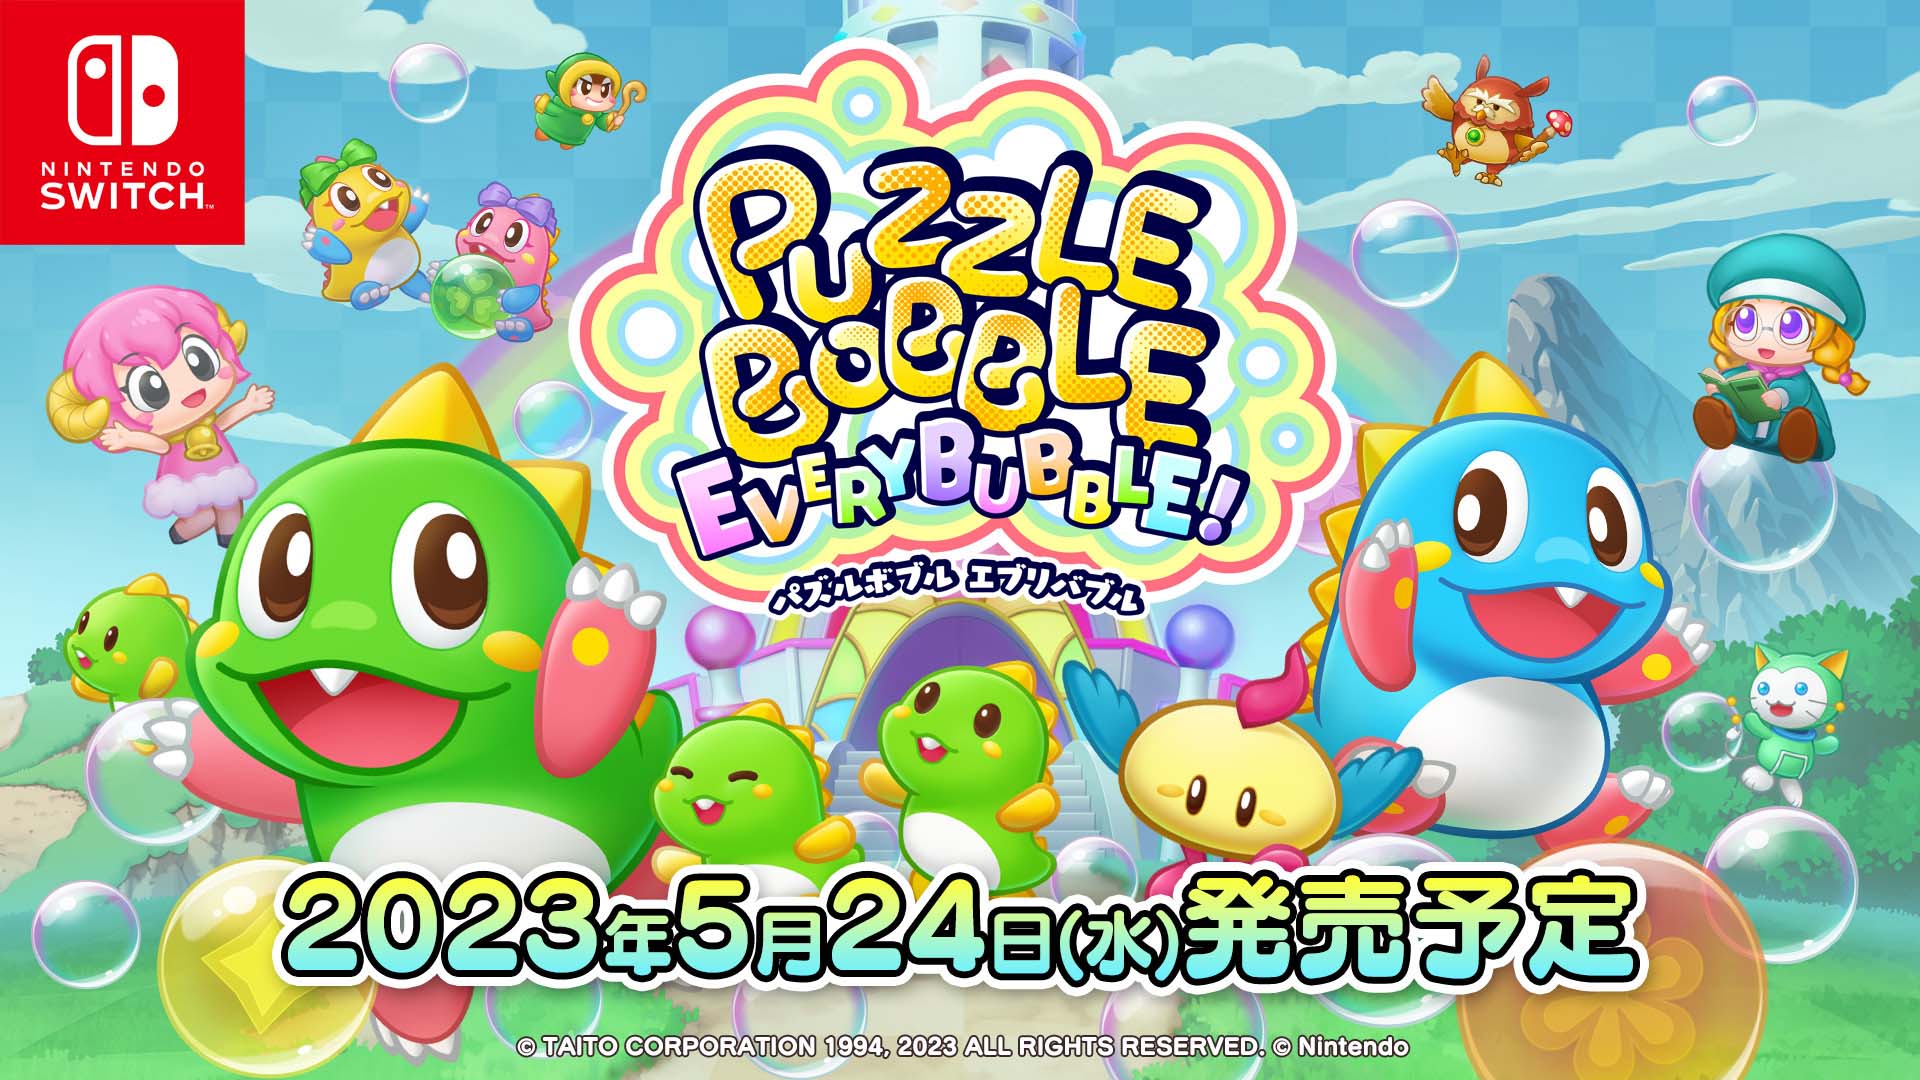 Nintendo Switch用ソフト『パズルボブル エブリバブル!』5月3日（水・祝）にヨドバシカメラ横浜店にてプレイ体験会開催！